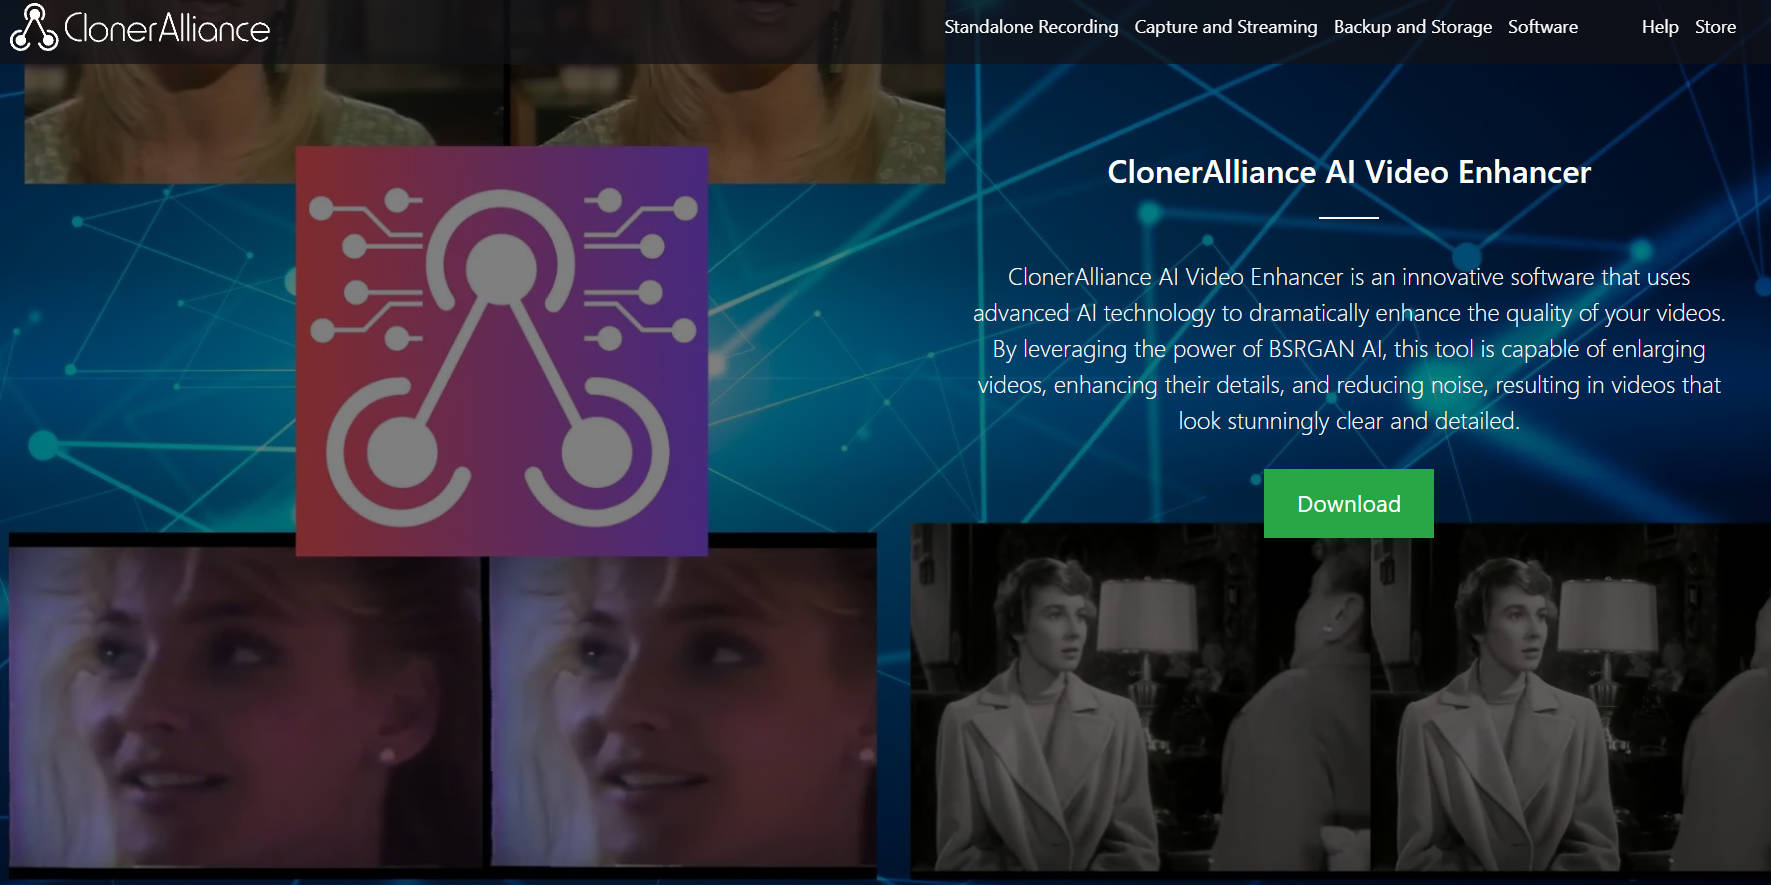 
ClonerAlliance AI Video Enhancer
